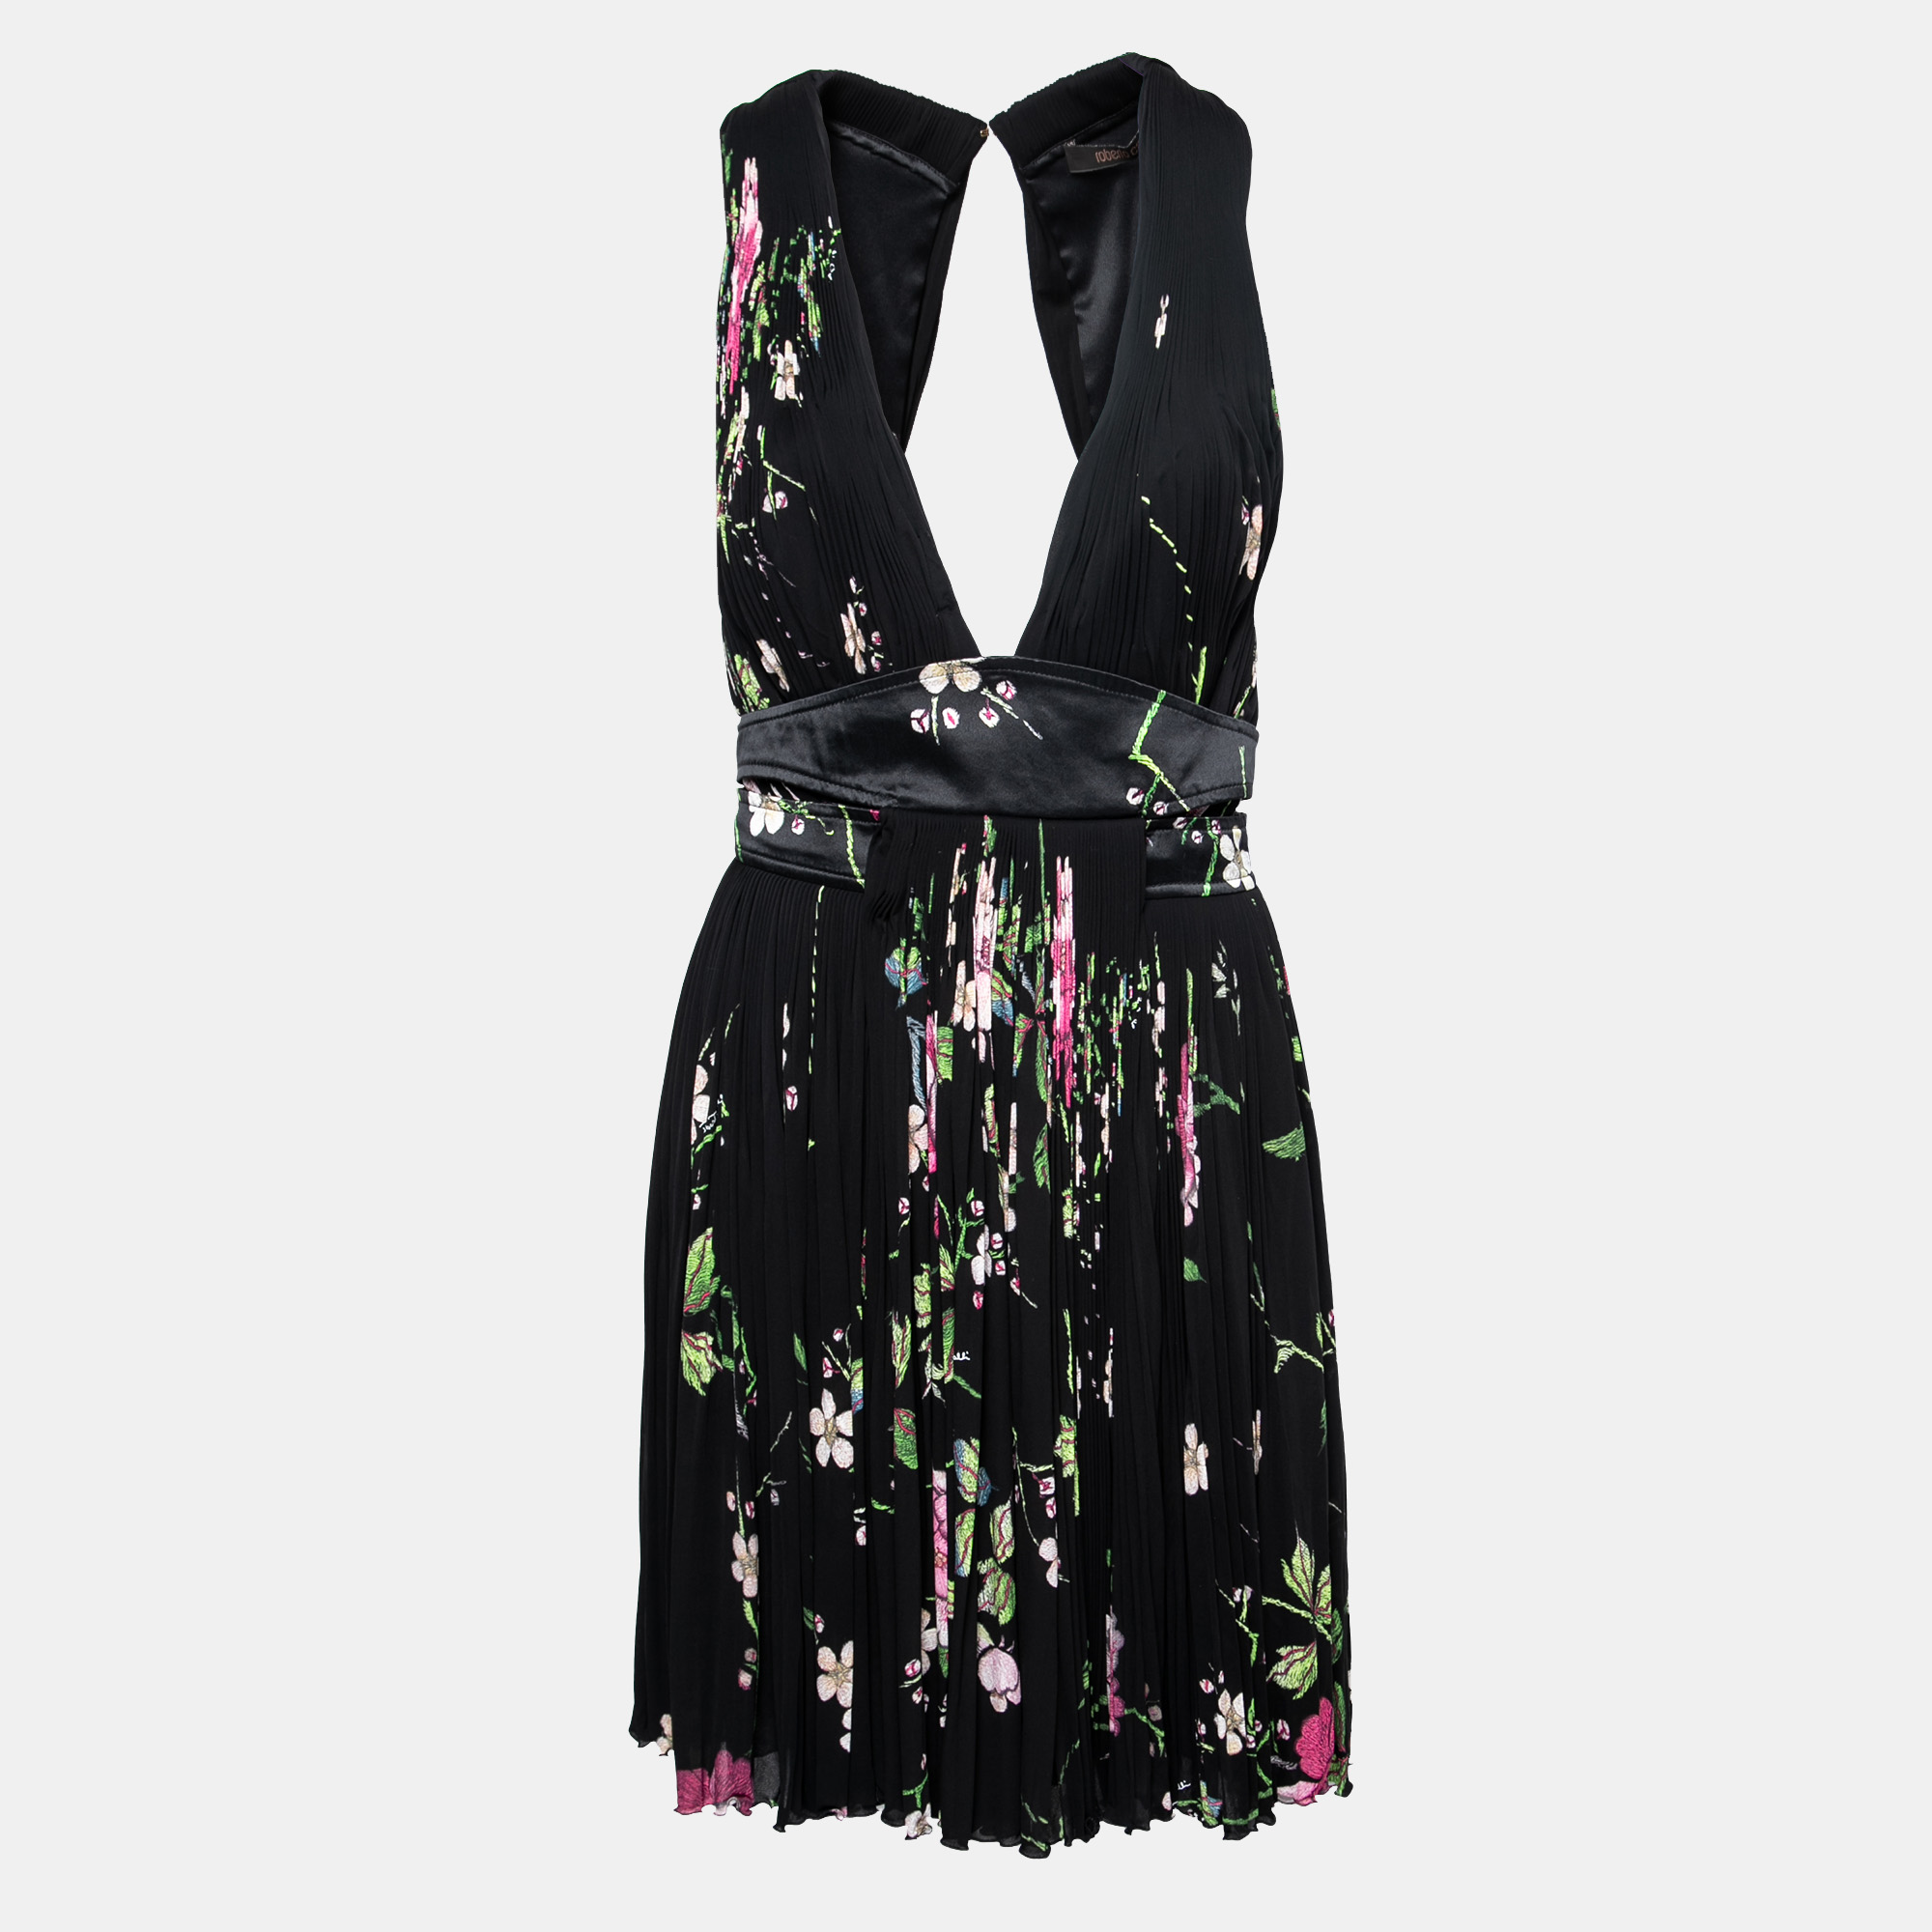 Black Floral Printed Crepe Plunging Neck Sleeveless Dress